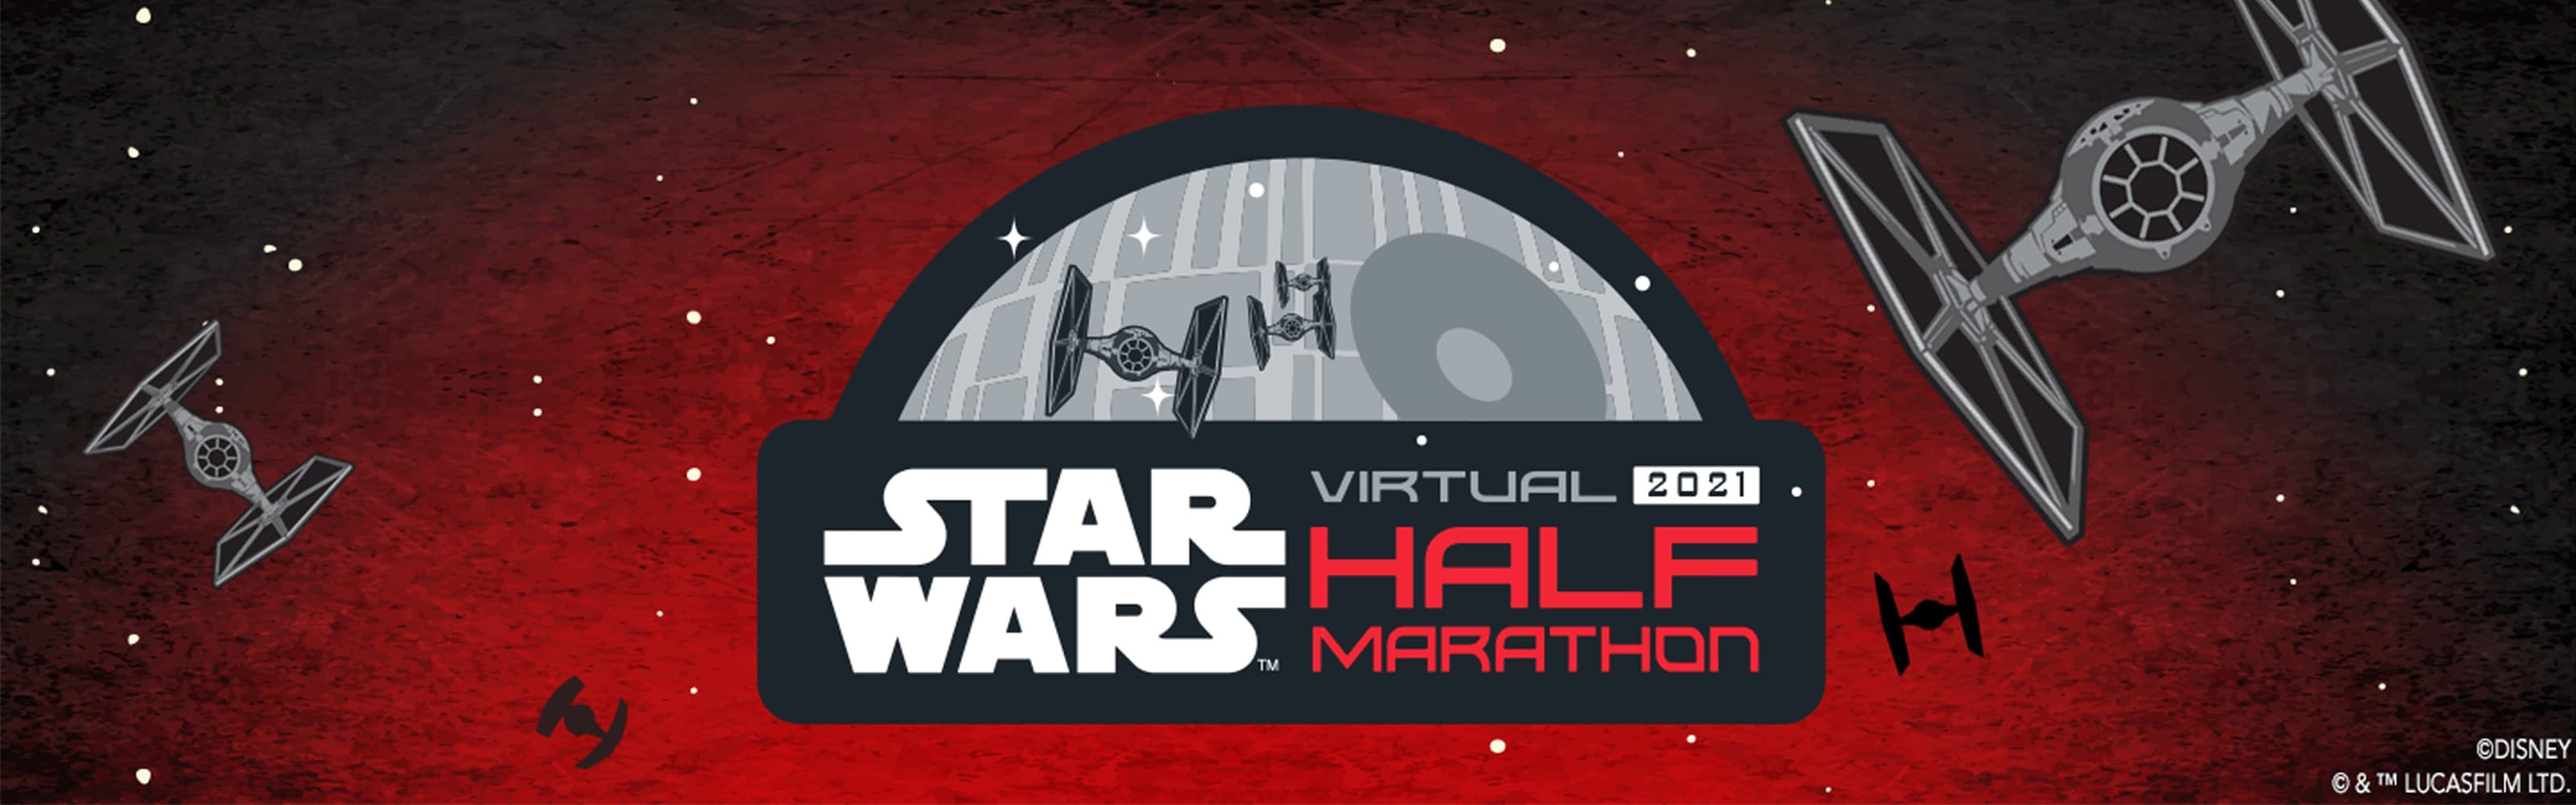 Star Wars Virtual Half Marathon Rundisney